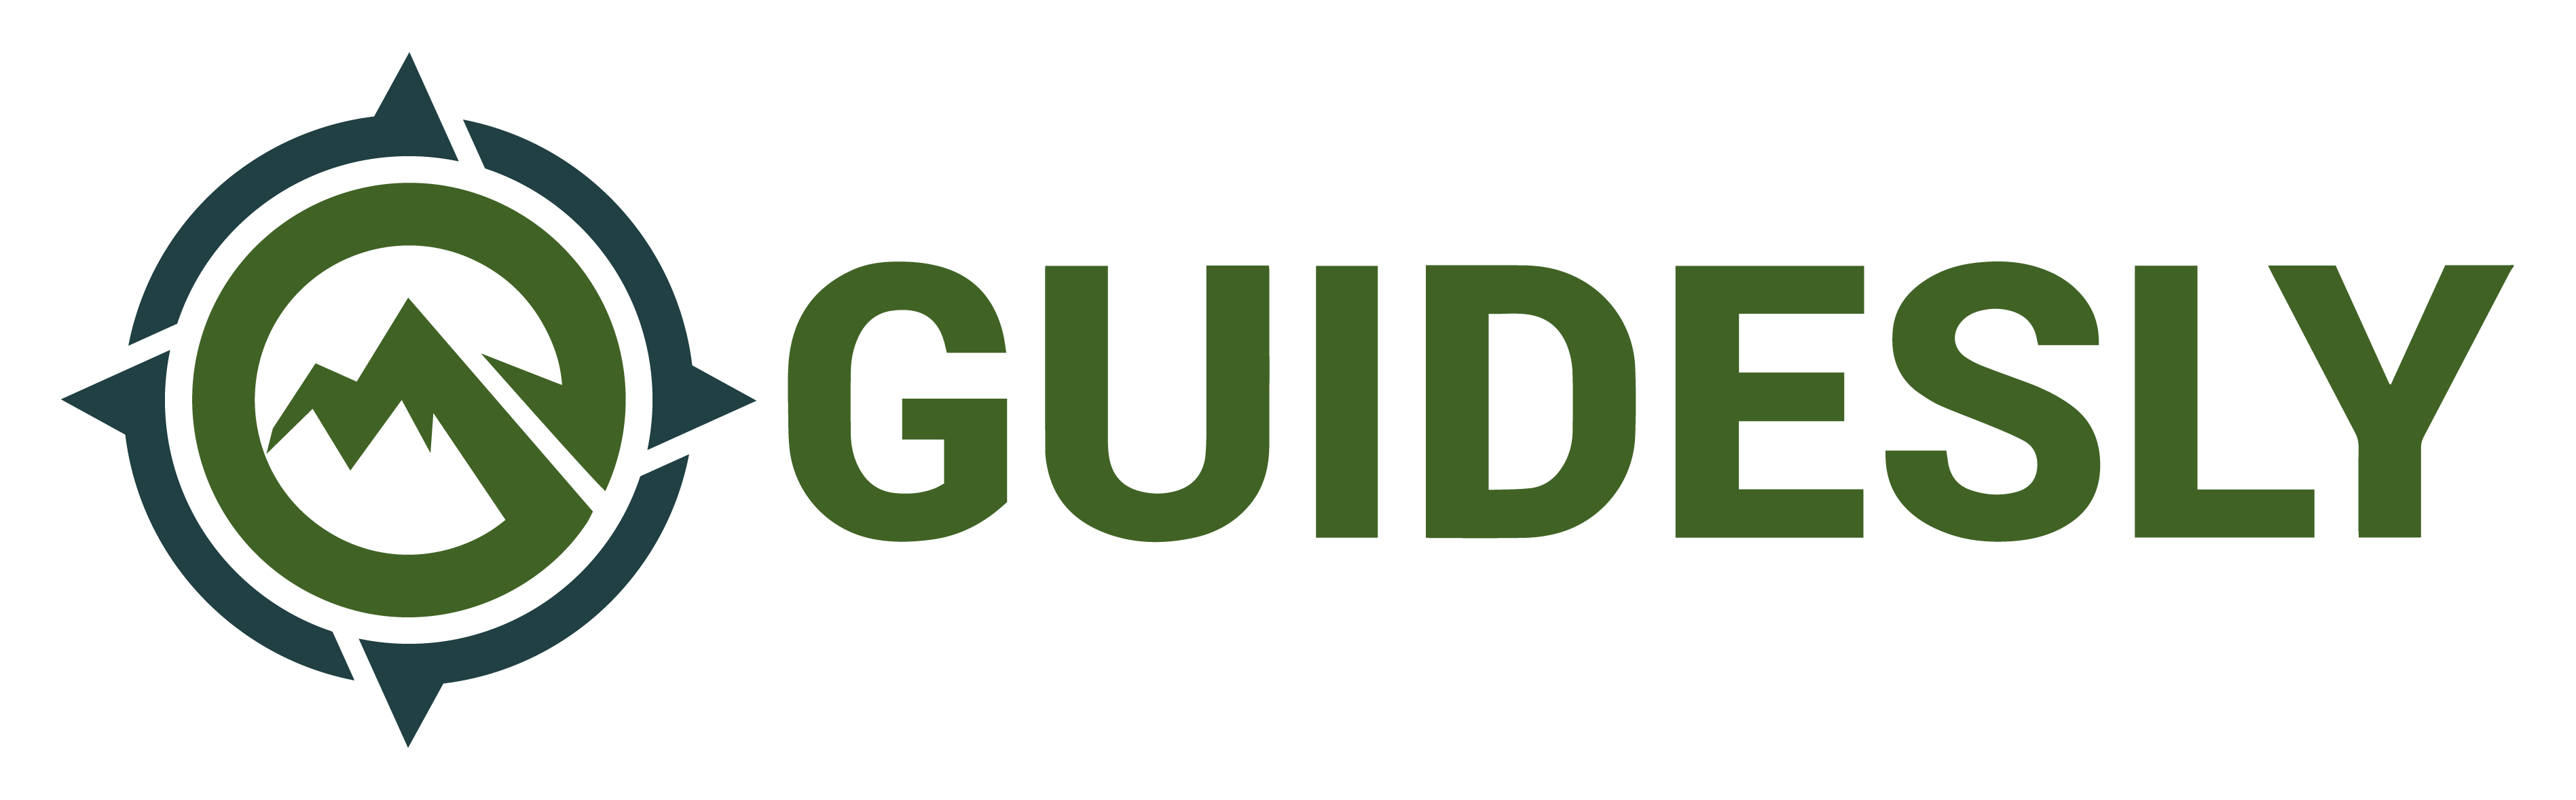 Guidesly Logo